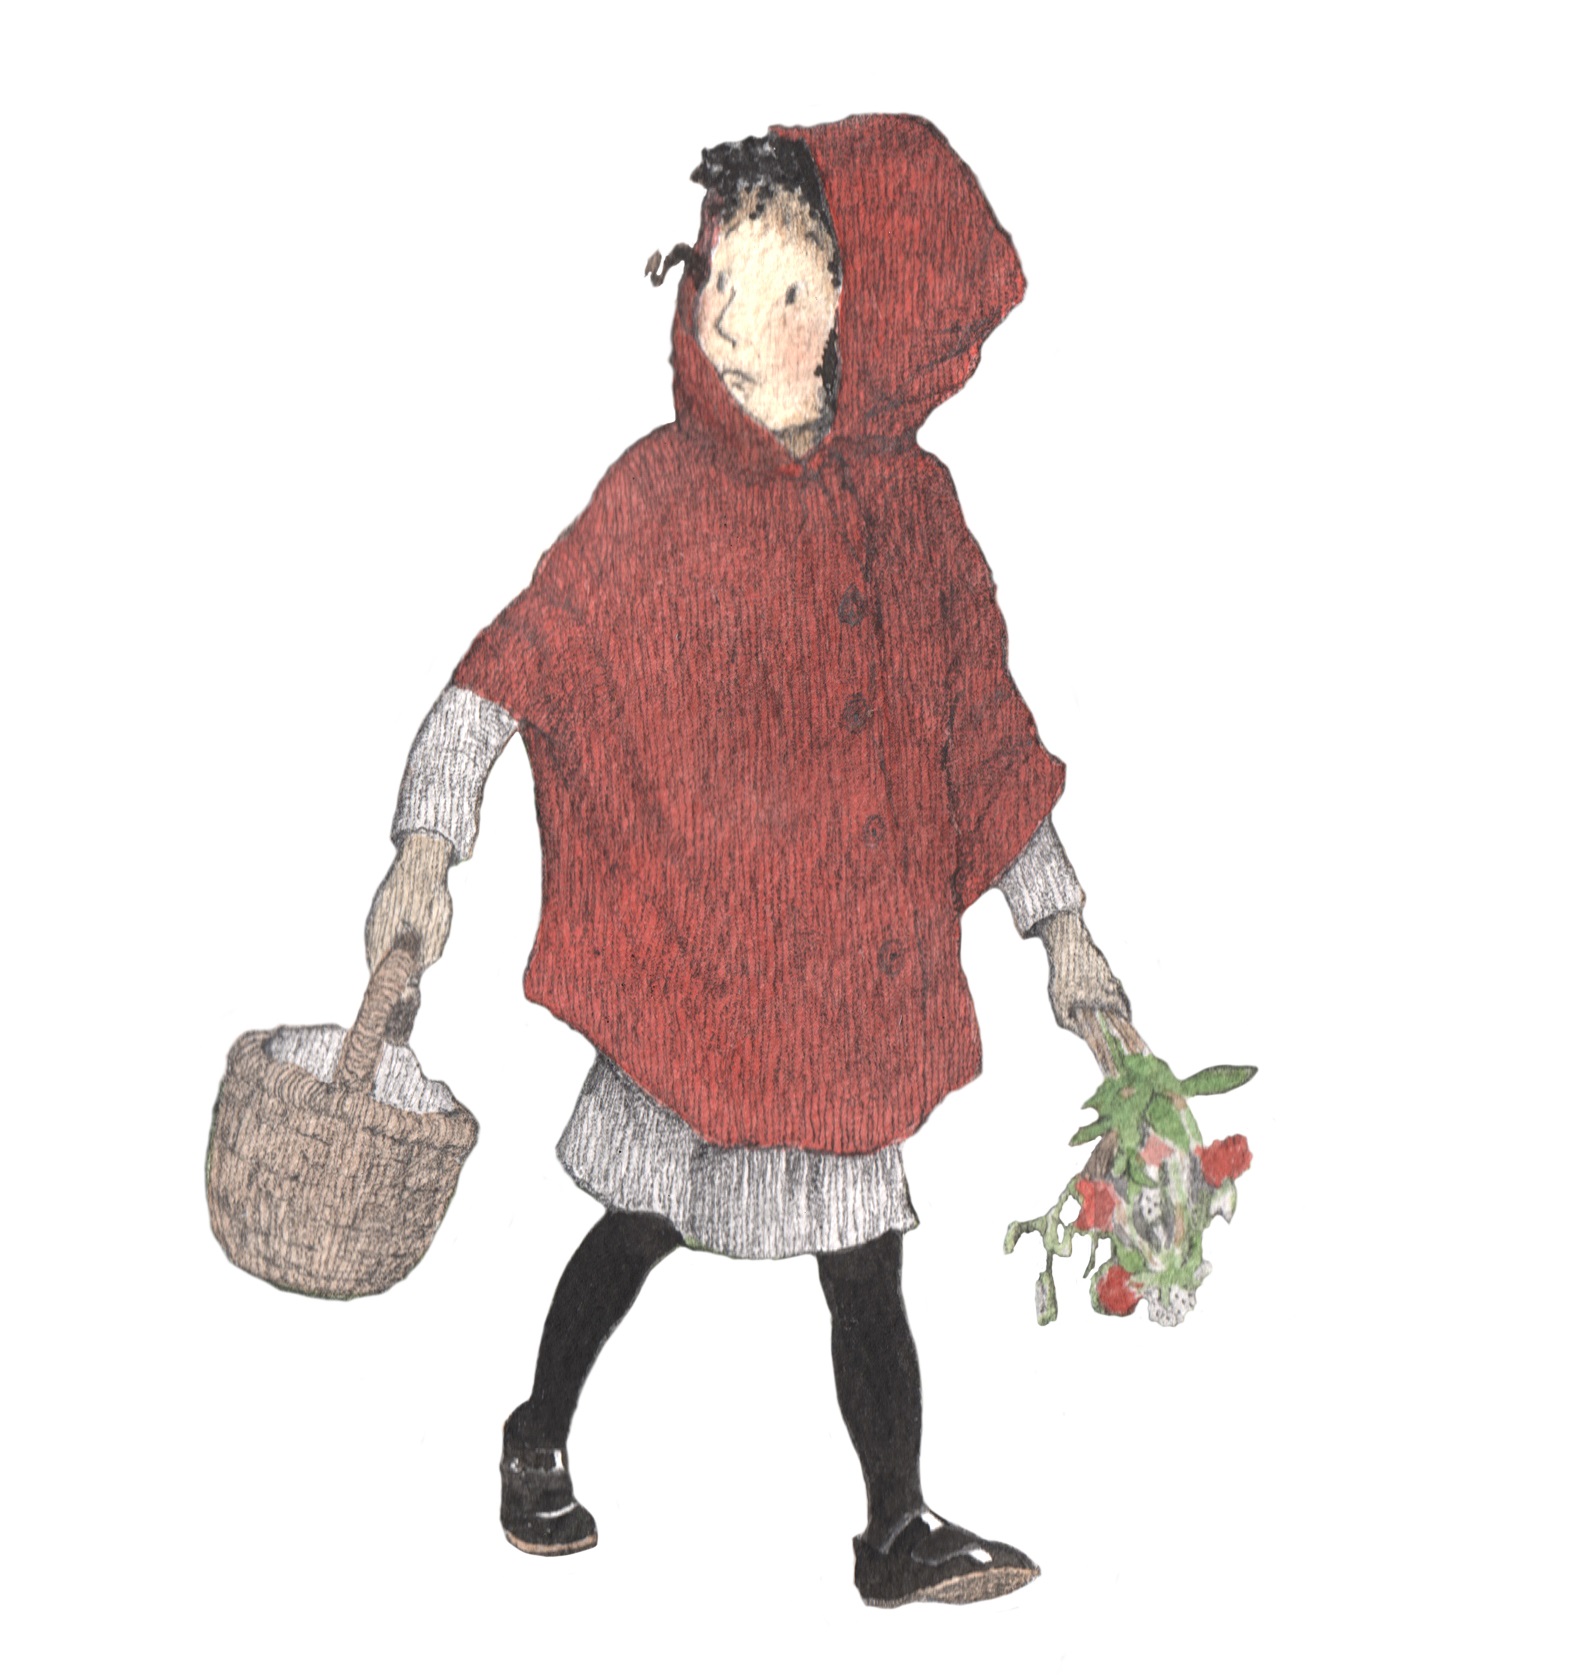 Red Riding Hood Helen Oxenbury illustration